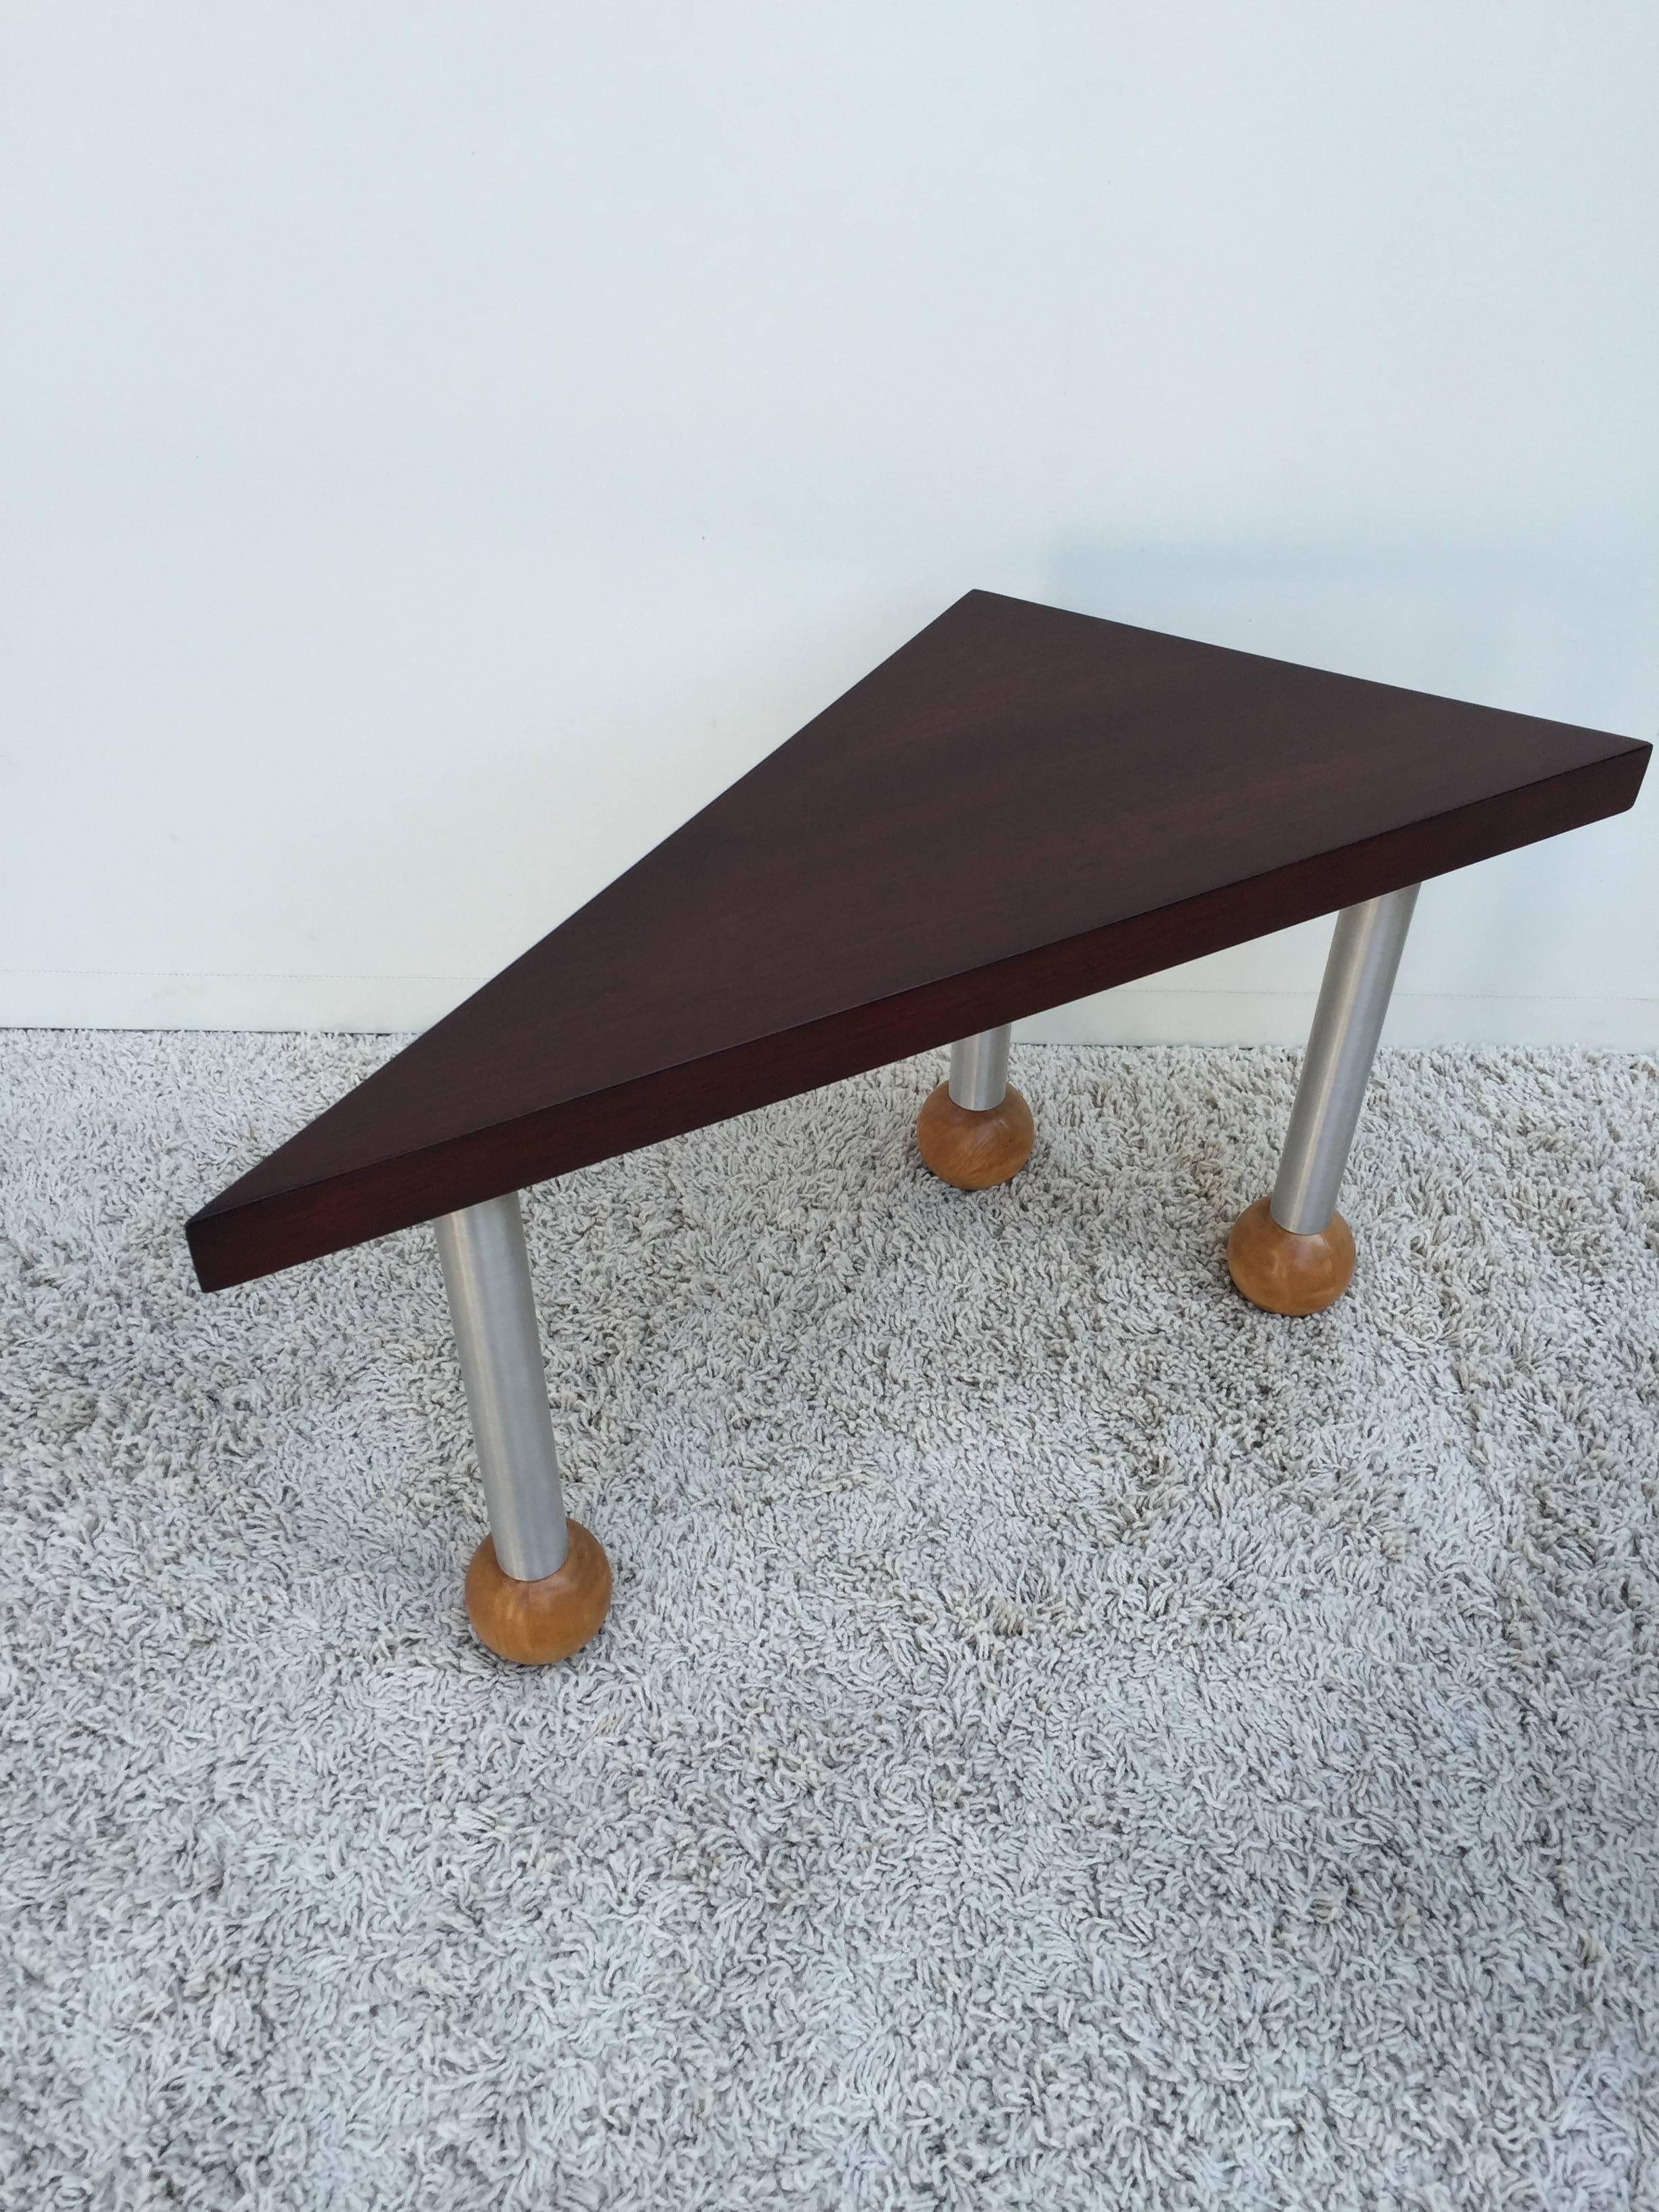 American Pair Triangular Tables Spun Aluminum Legs Blonde Mahogany Ball Feet Russel Wrigh